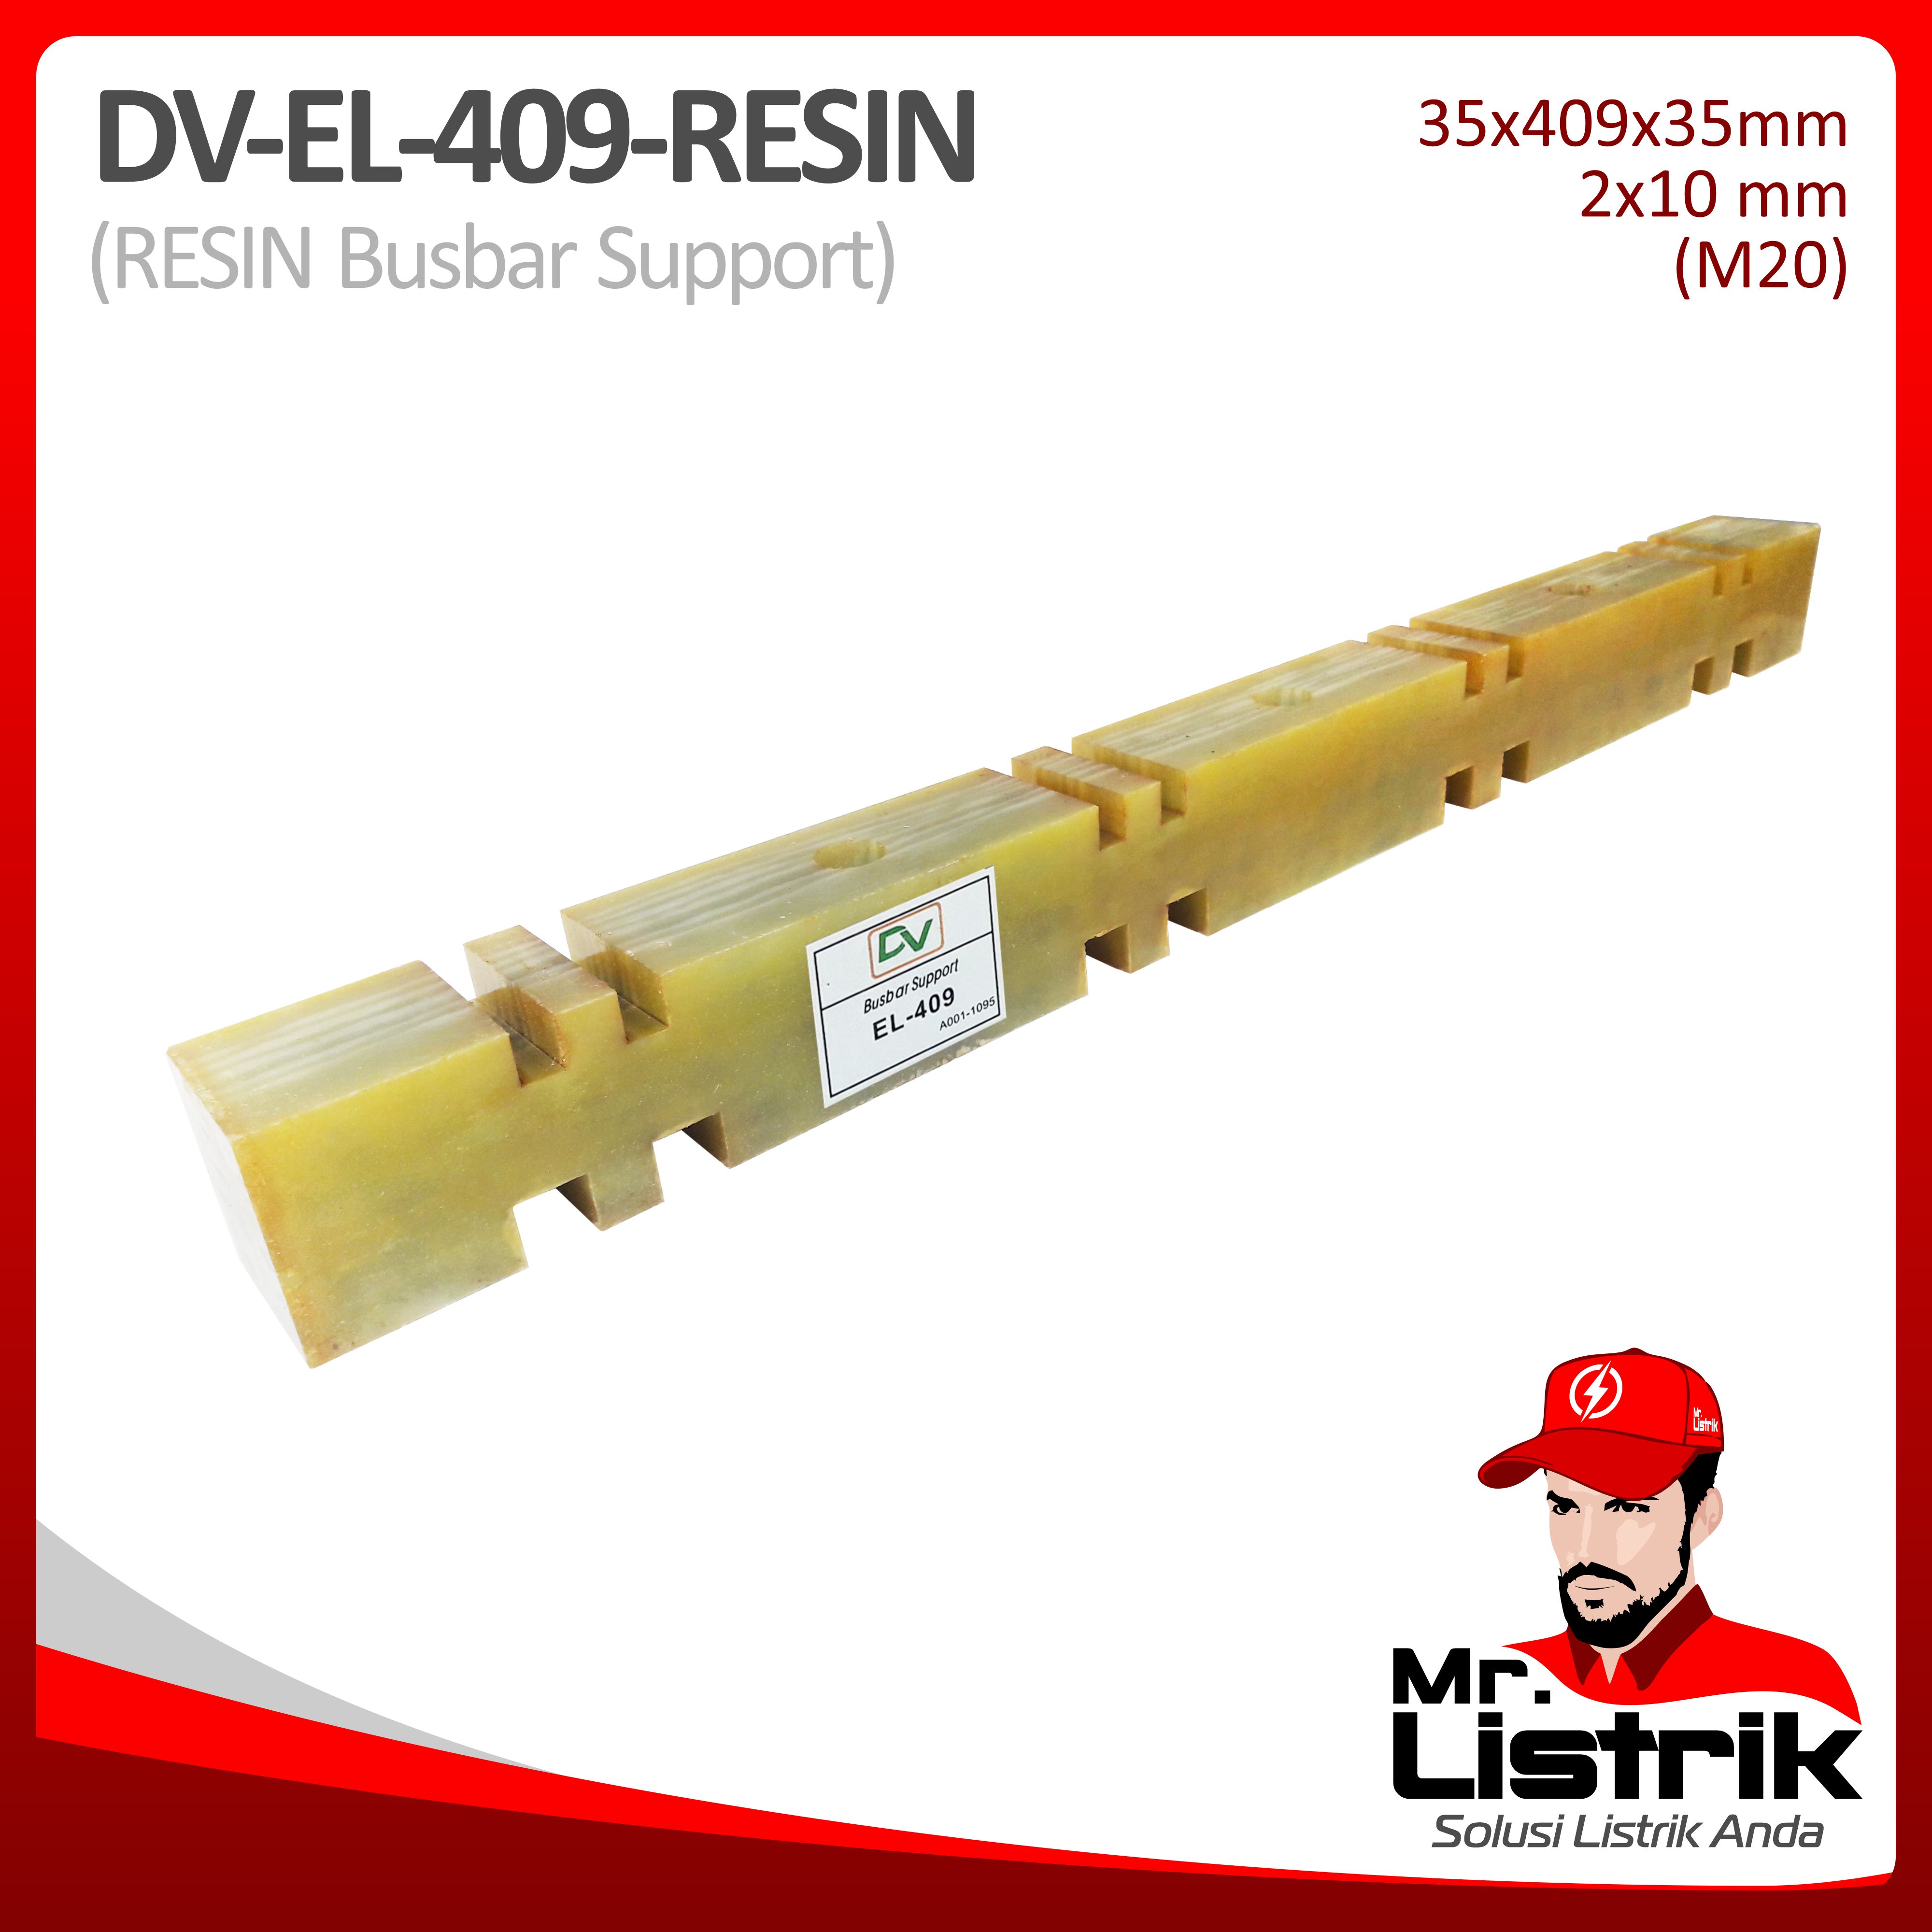 Busbar Support Cast Resin DV EL-409